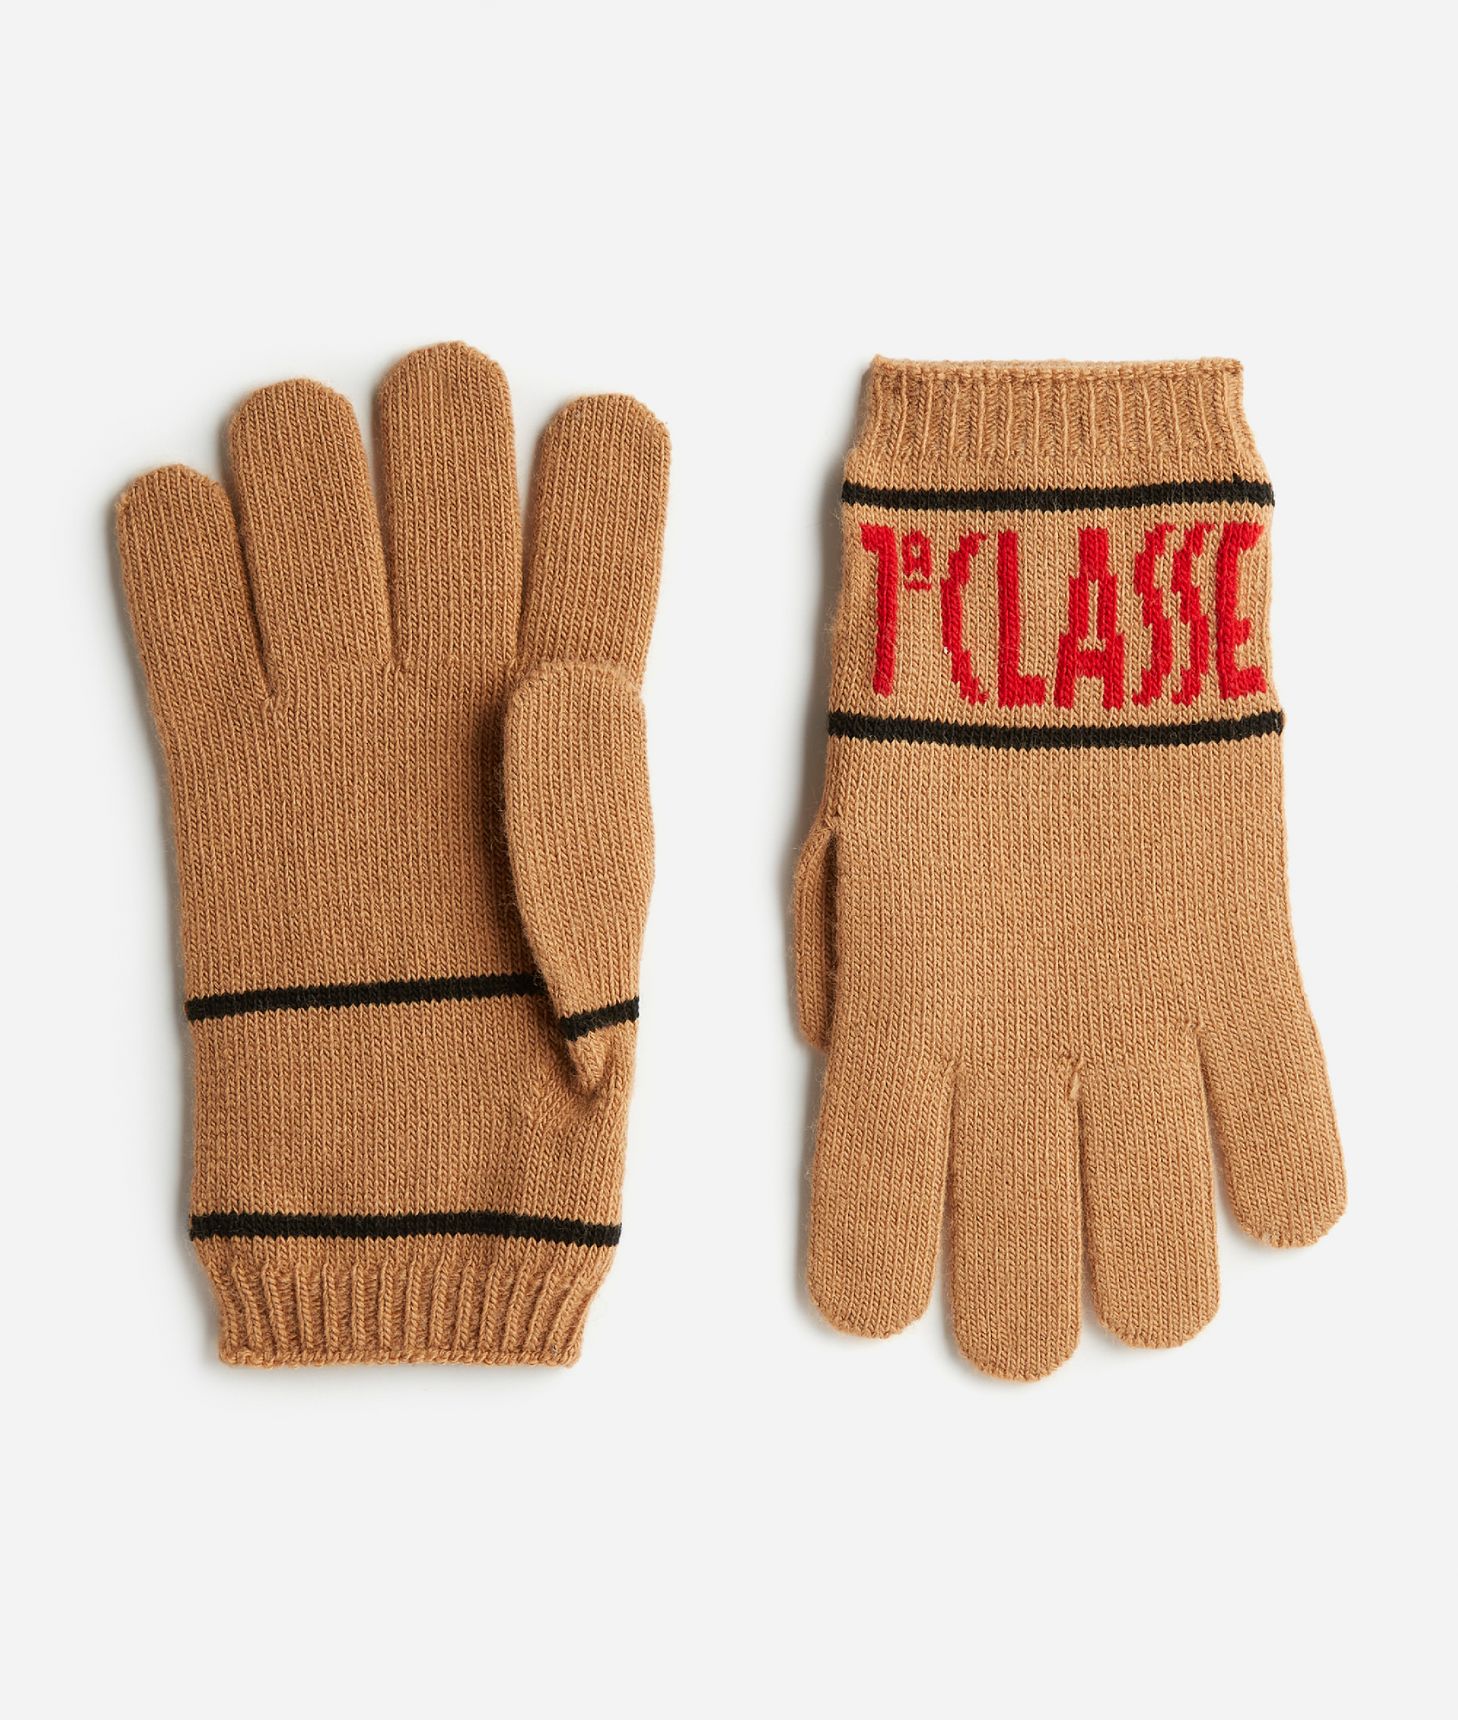 1ᴬ Classe gloves Camel,front